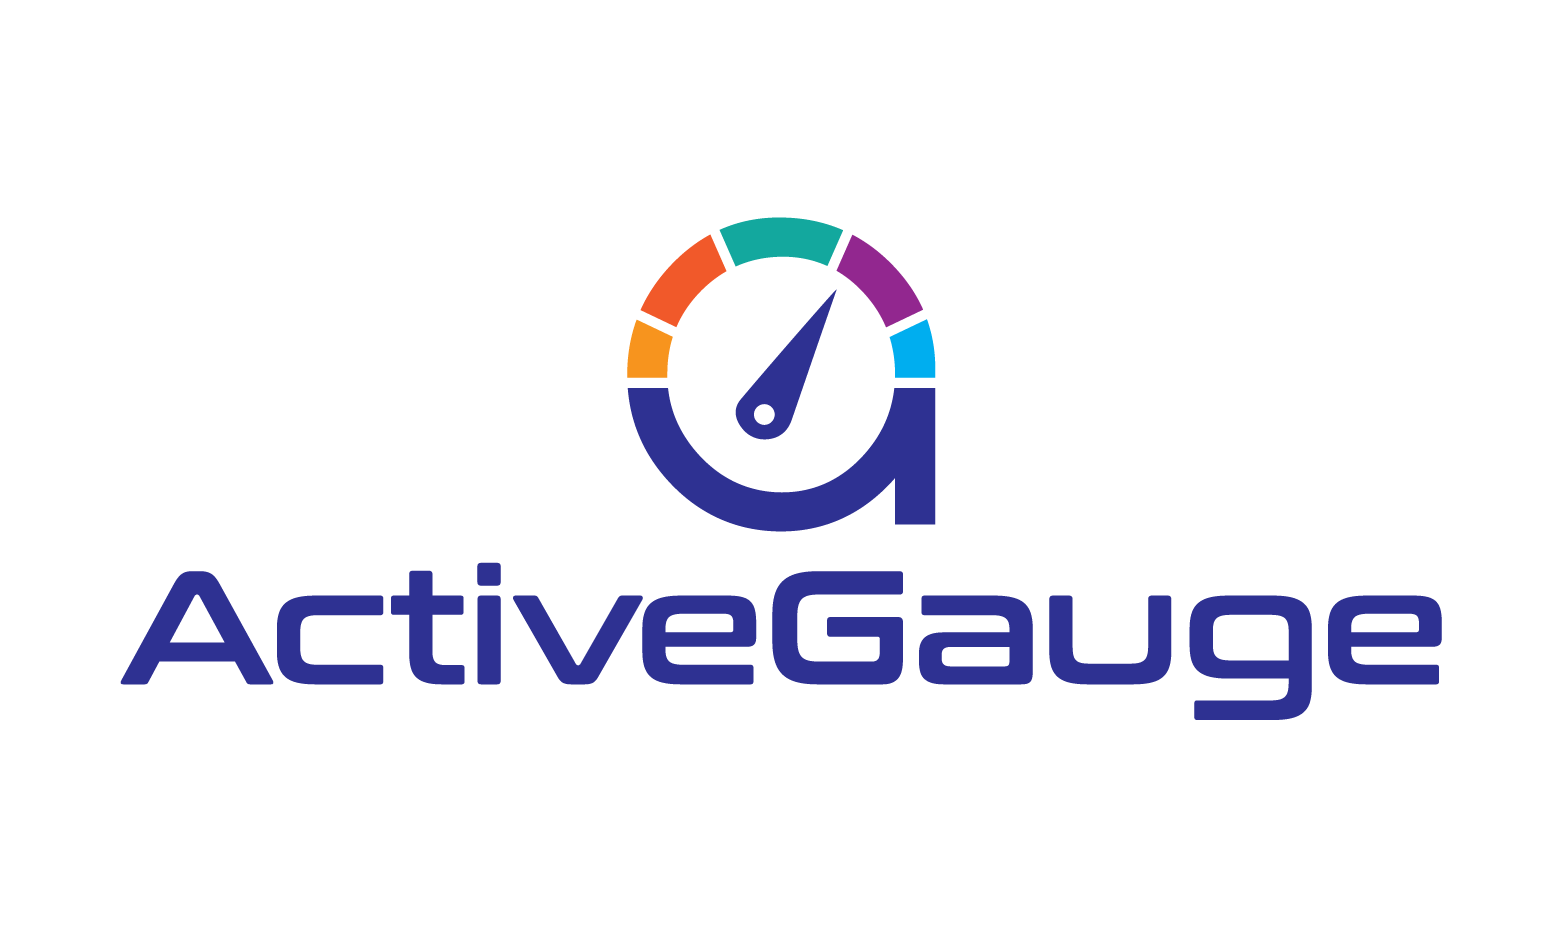 ActiveGauge.com - Creative brandable domain for sale